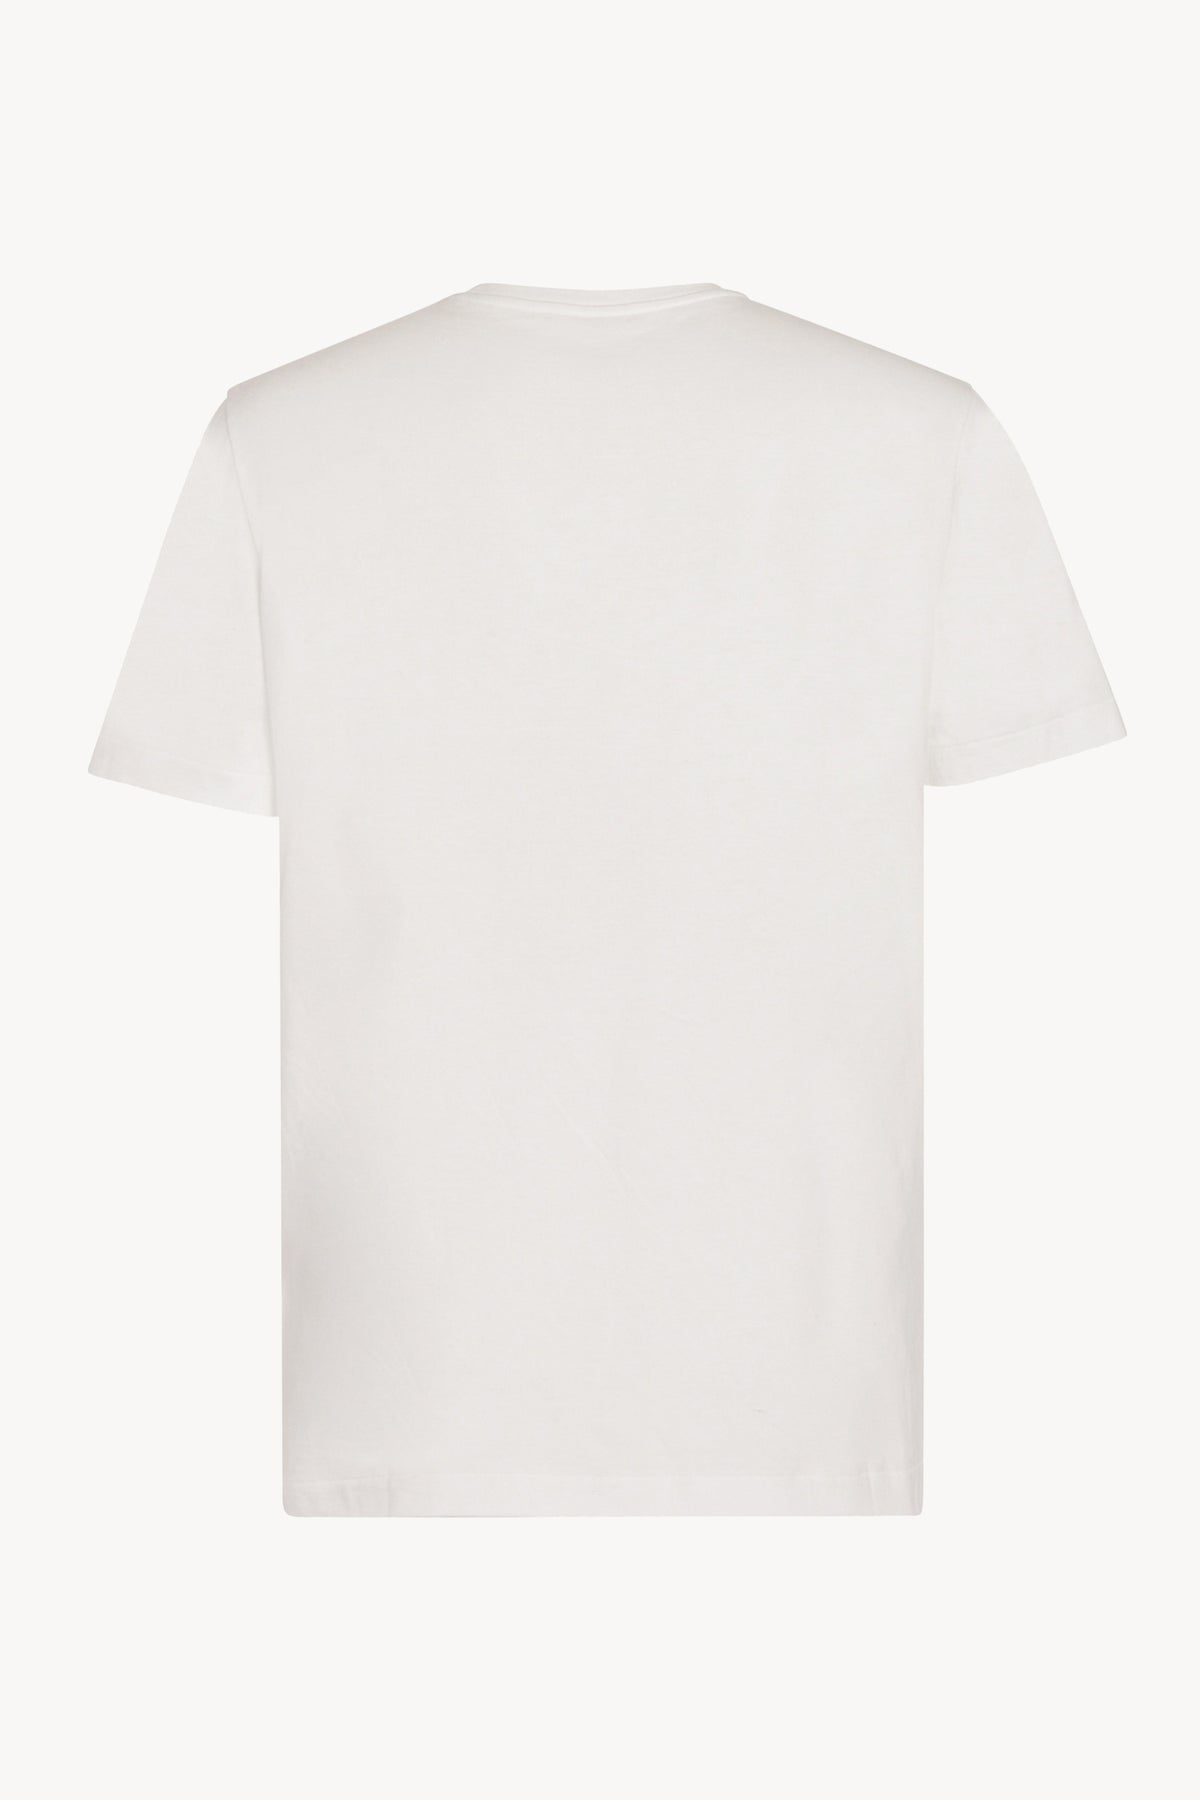 Luke T-Shirt White in Cotton – The Row